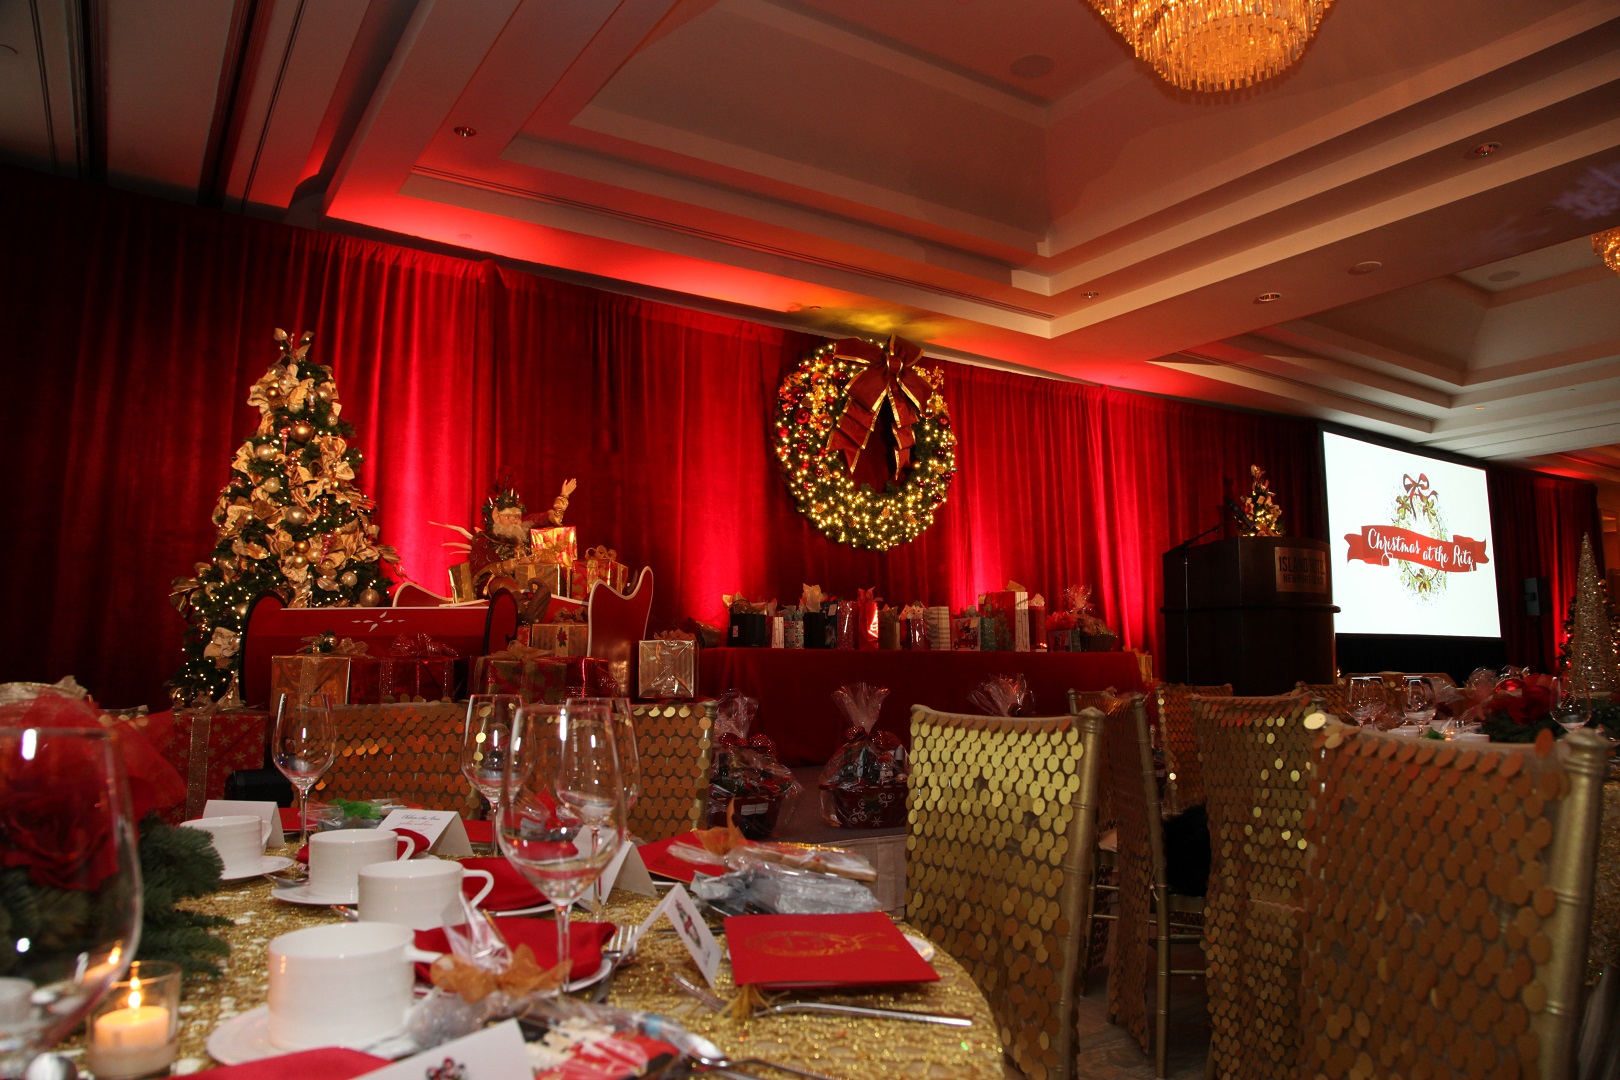 Christmas at The Ritz ballroom